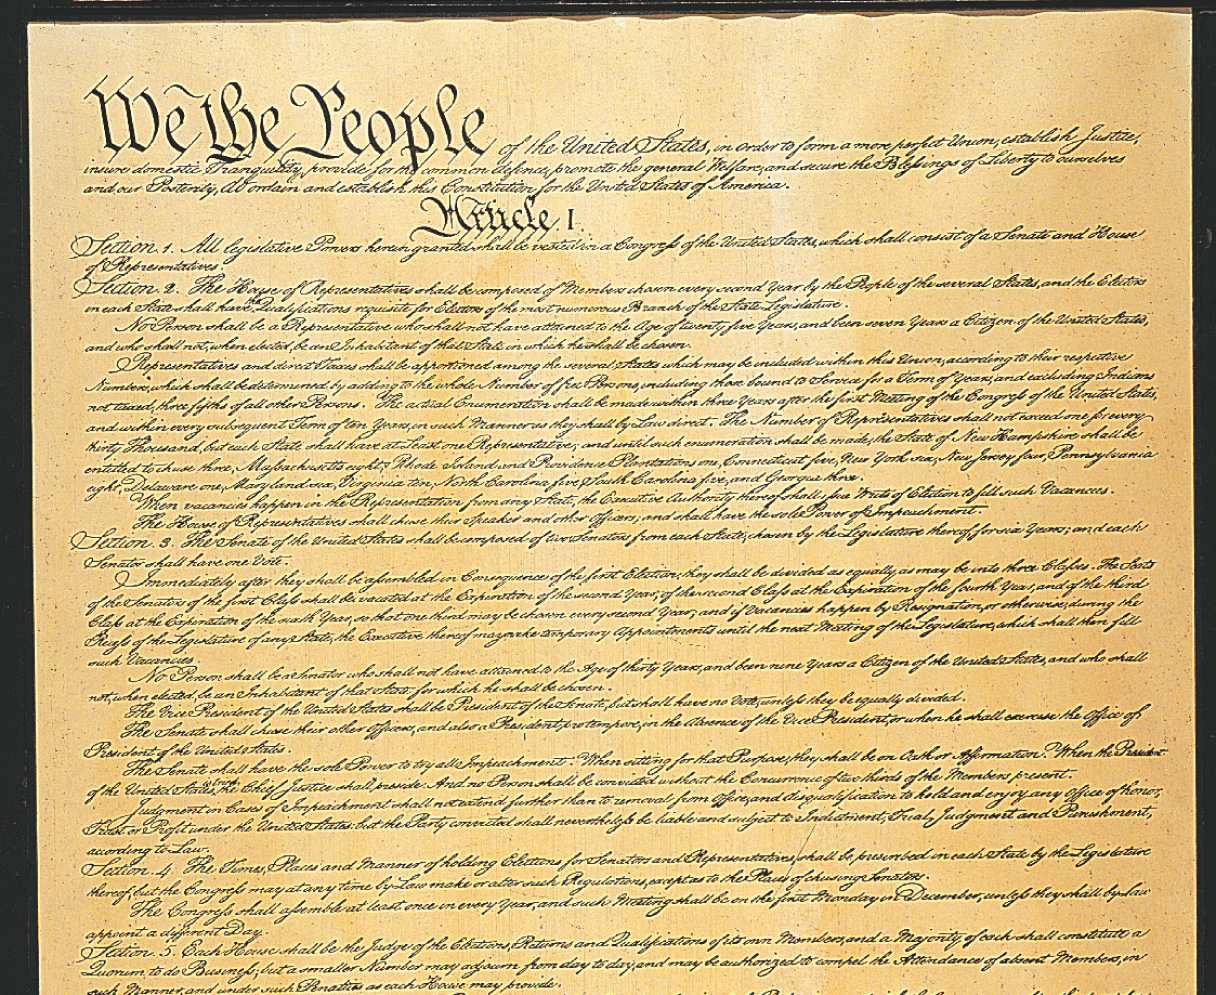 A photo of the original handwritten U.S. Constitution document.